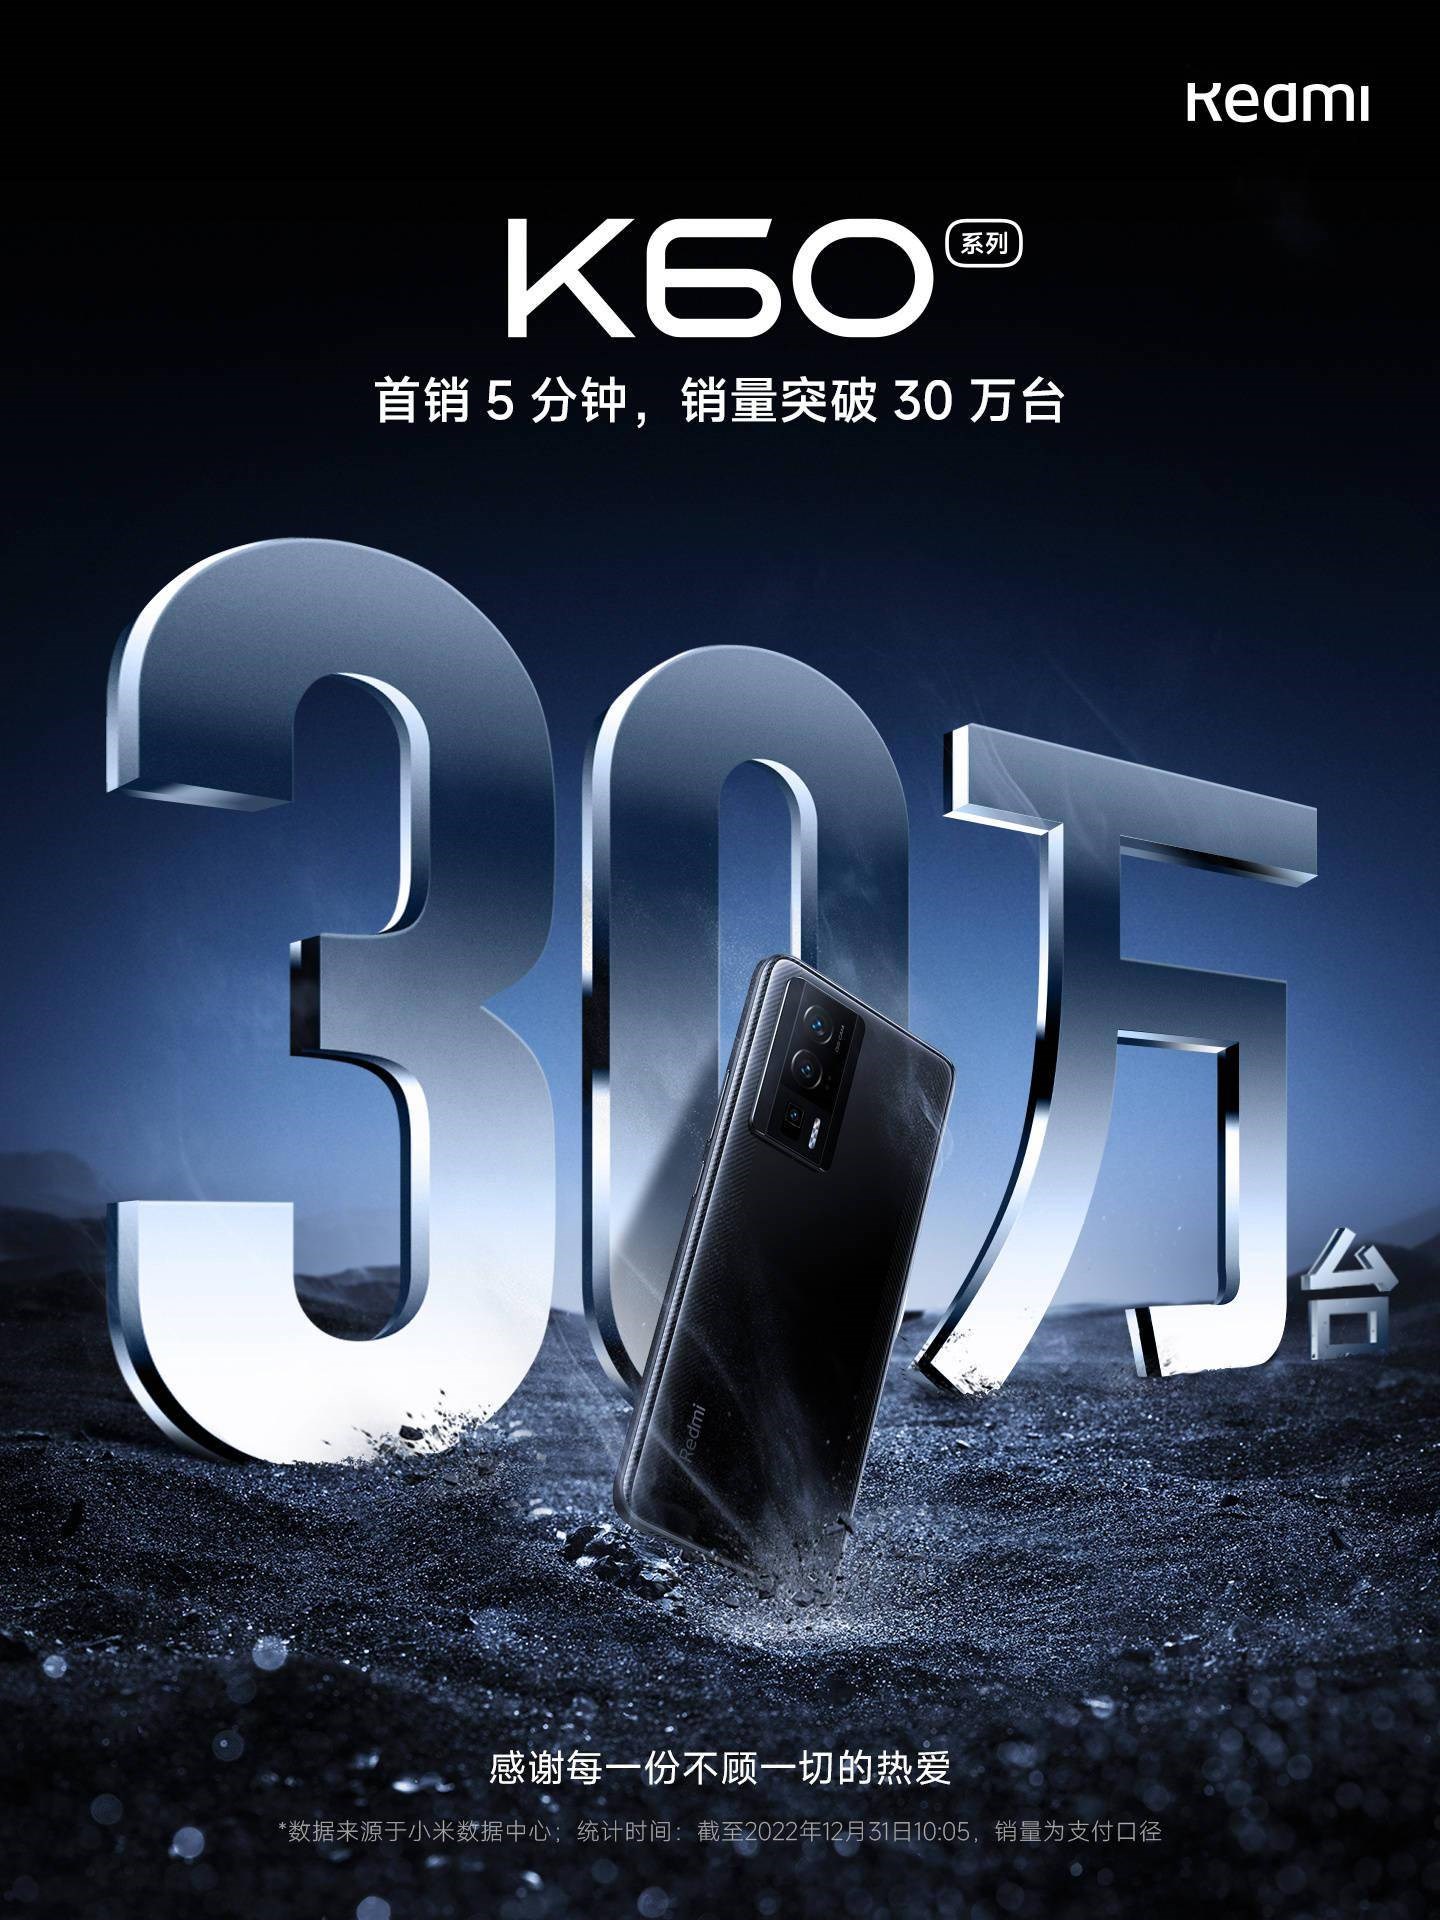 Xiaomi, 5 dakikada 300 binden fazla Redmi K60 telefon sattı